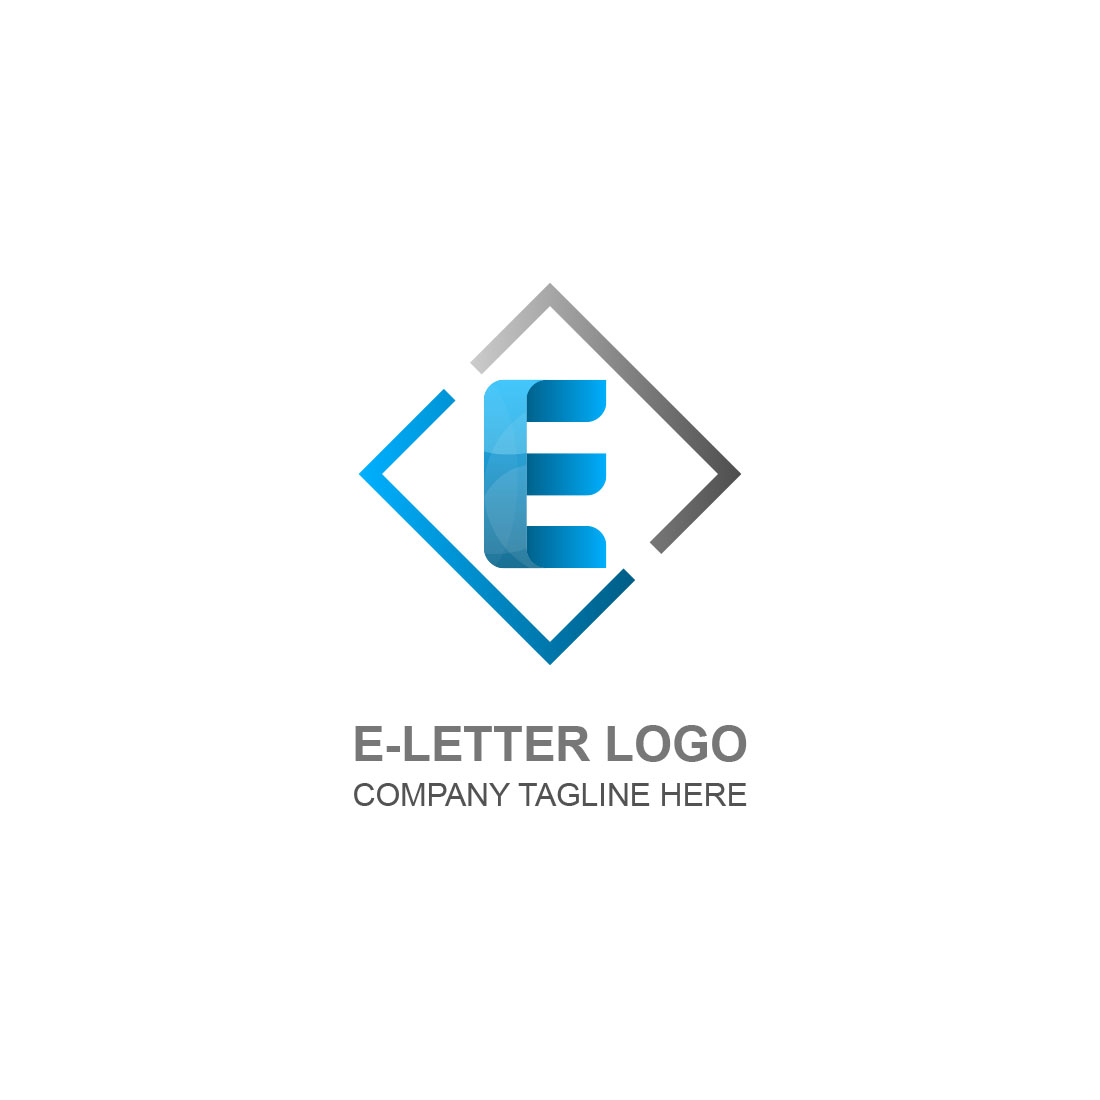 E Letter Logo preview image.